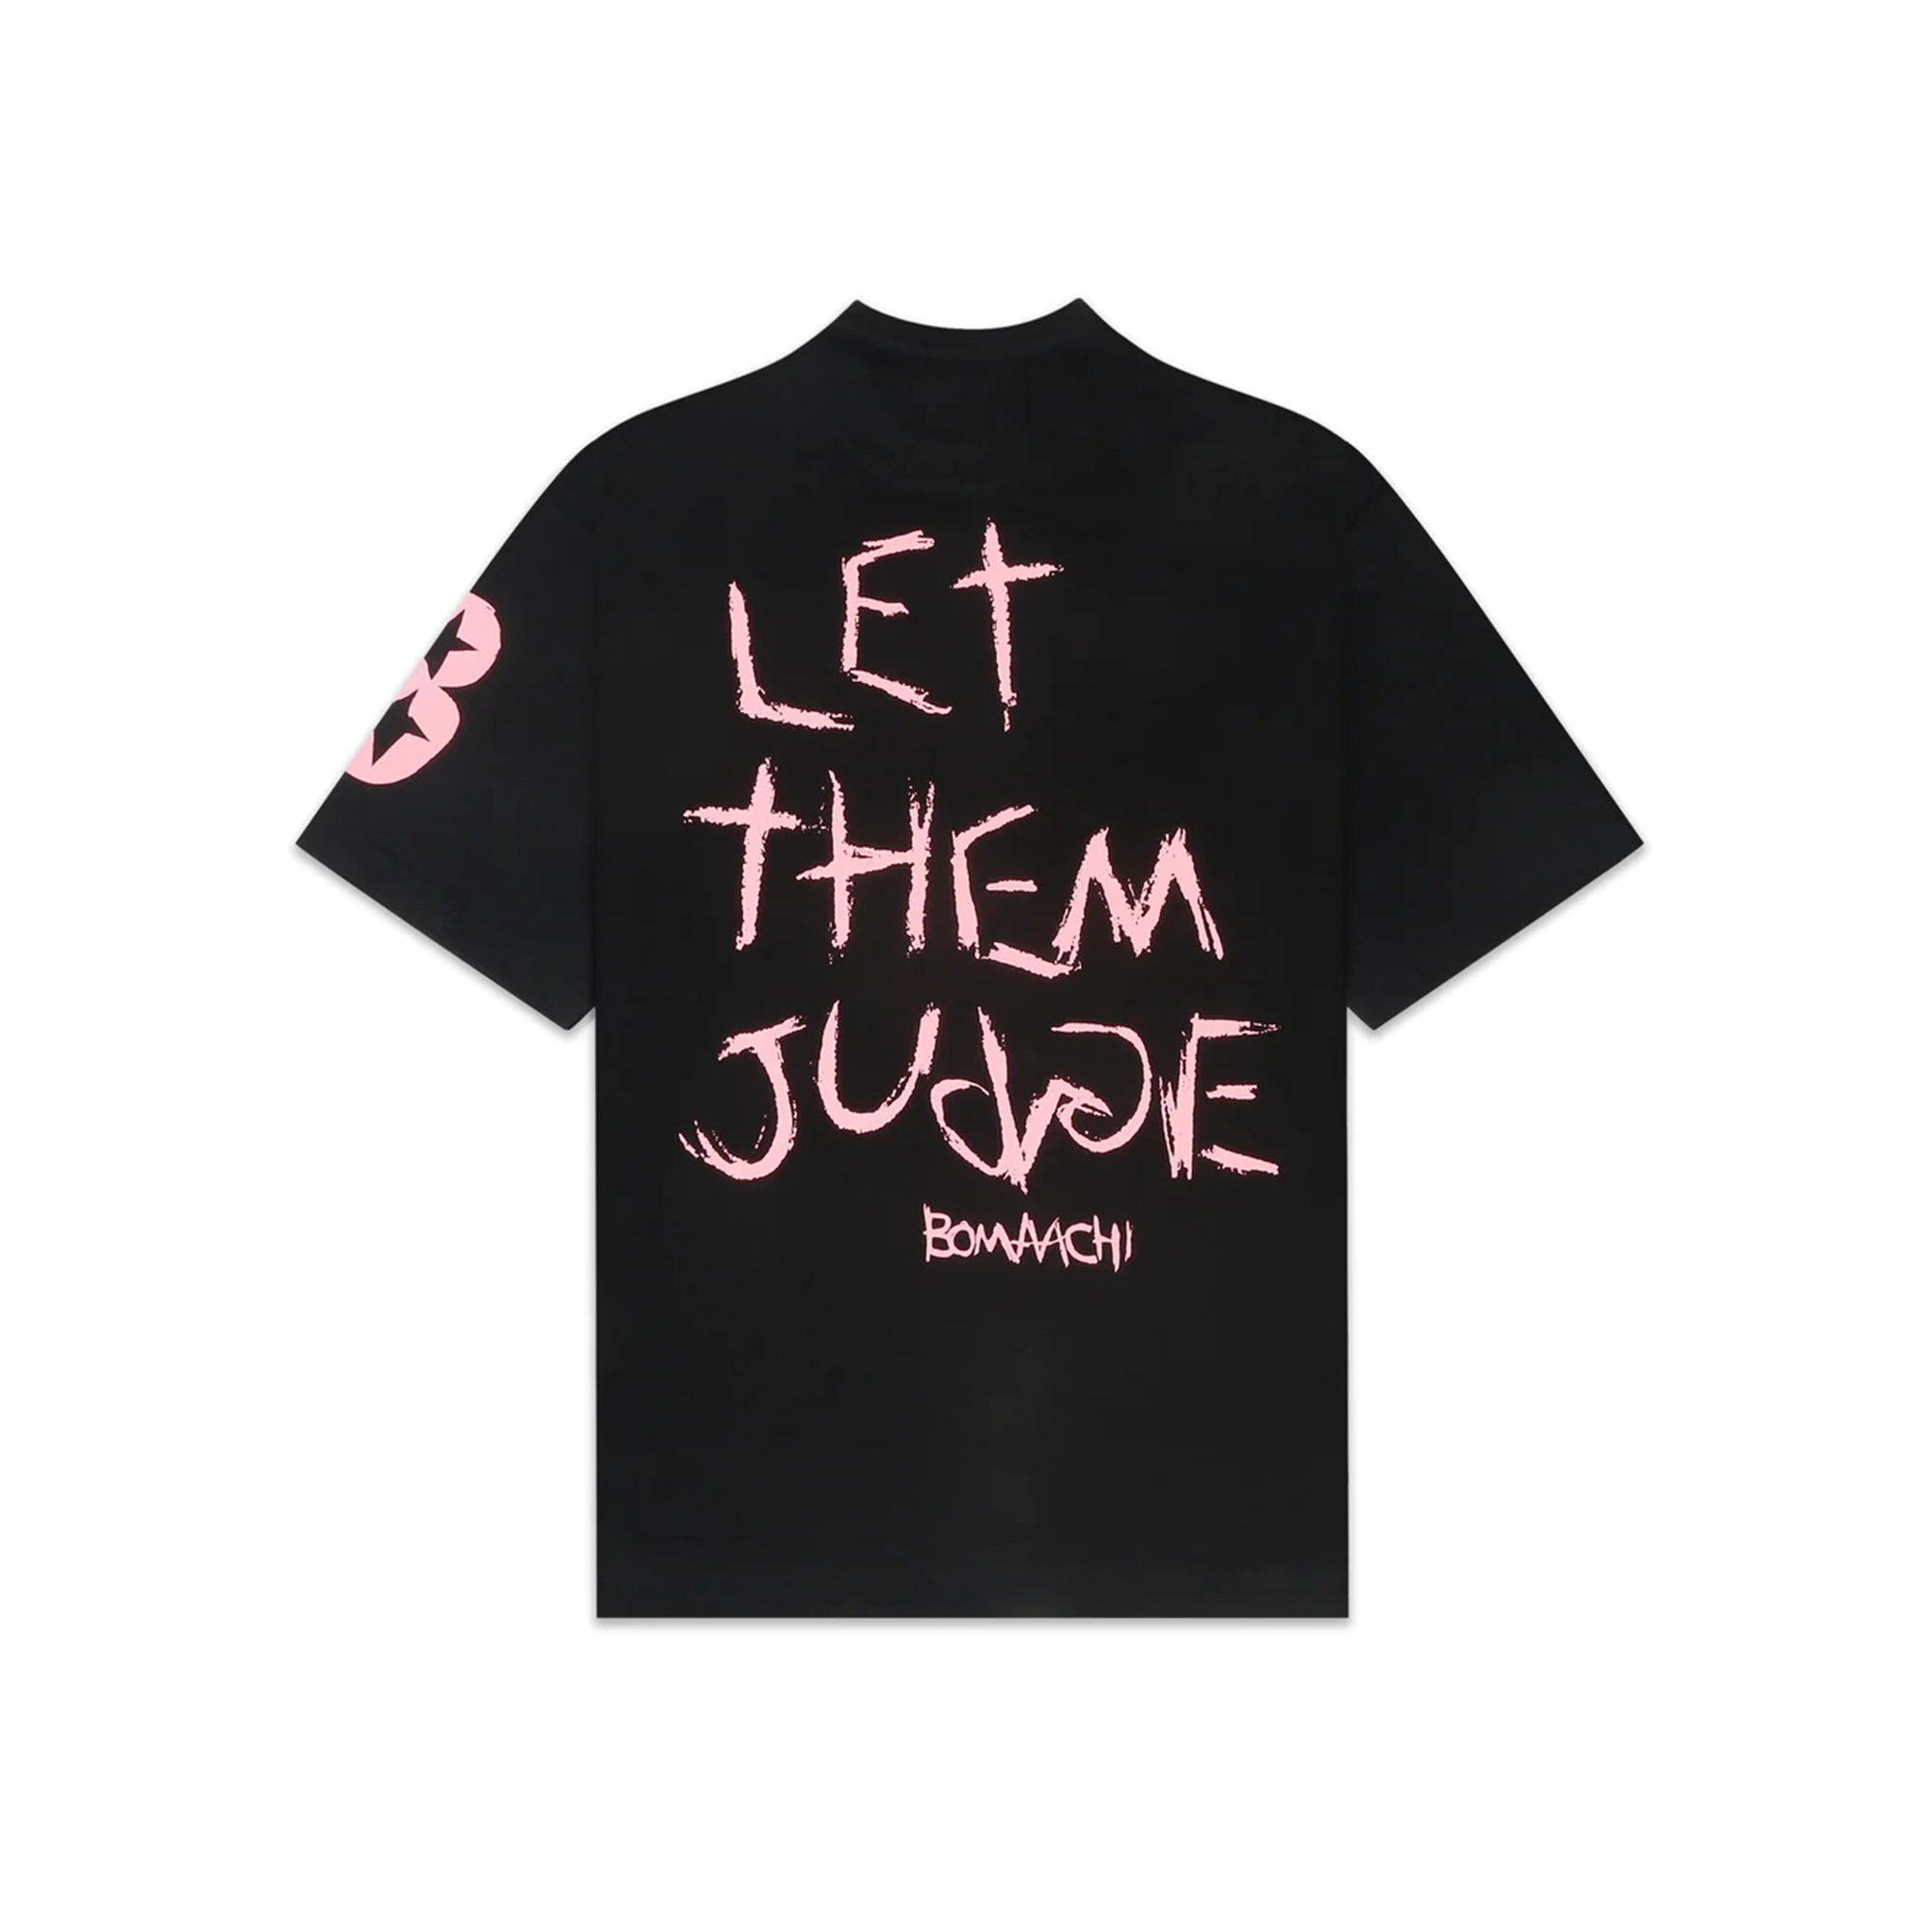 Let Them Judge Black T-shirt